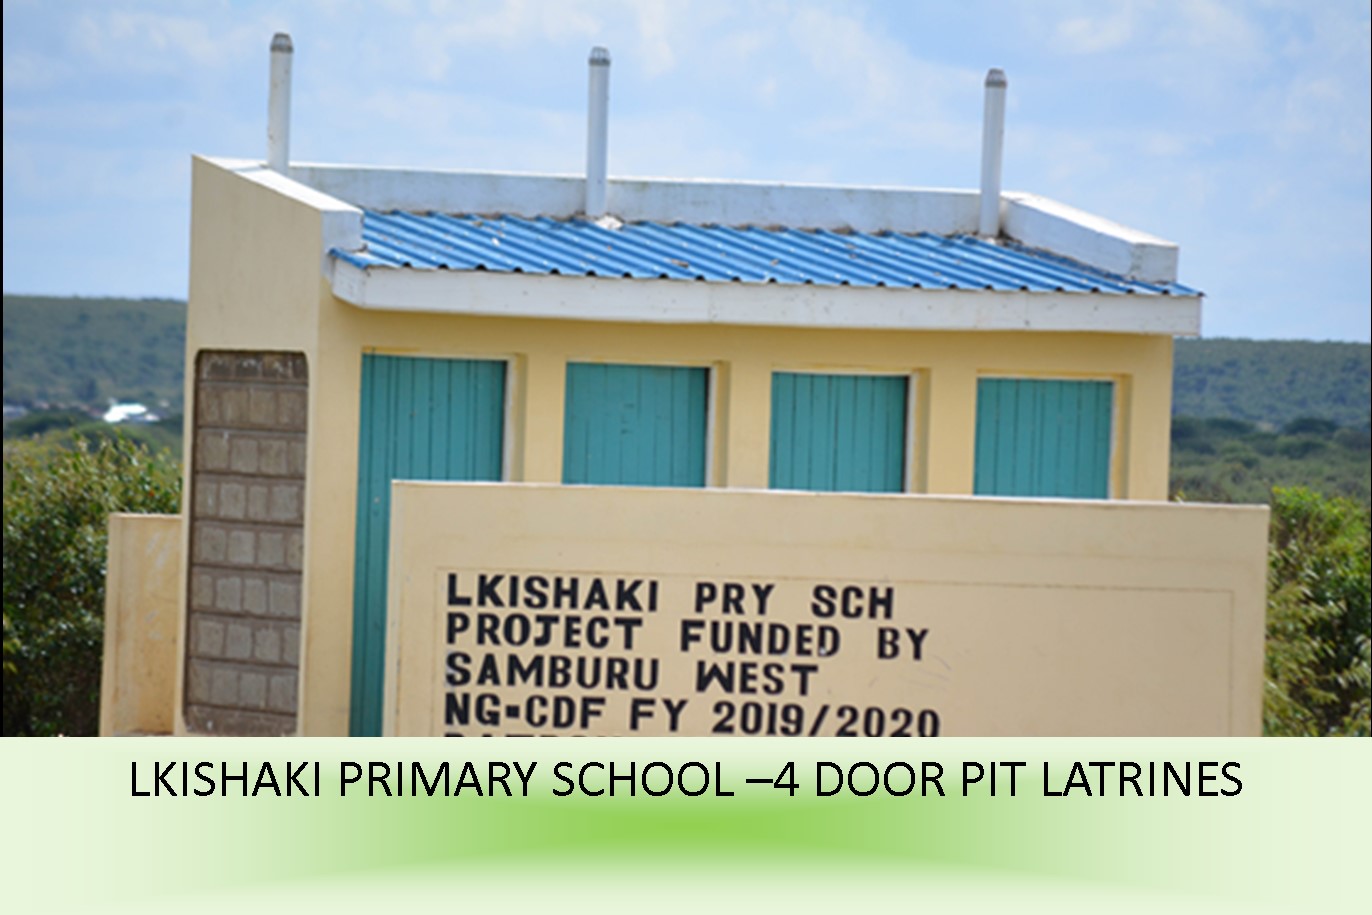 https://samburu-west.ngcdf.go.ke/wp-content/uploads/2021/08/lkishaki-primary-school-4-door-pit-latrines.jpg